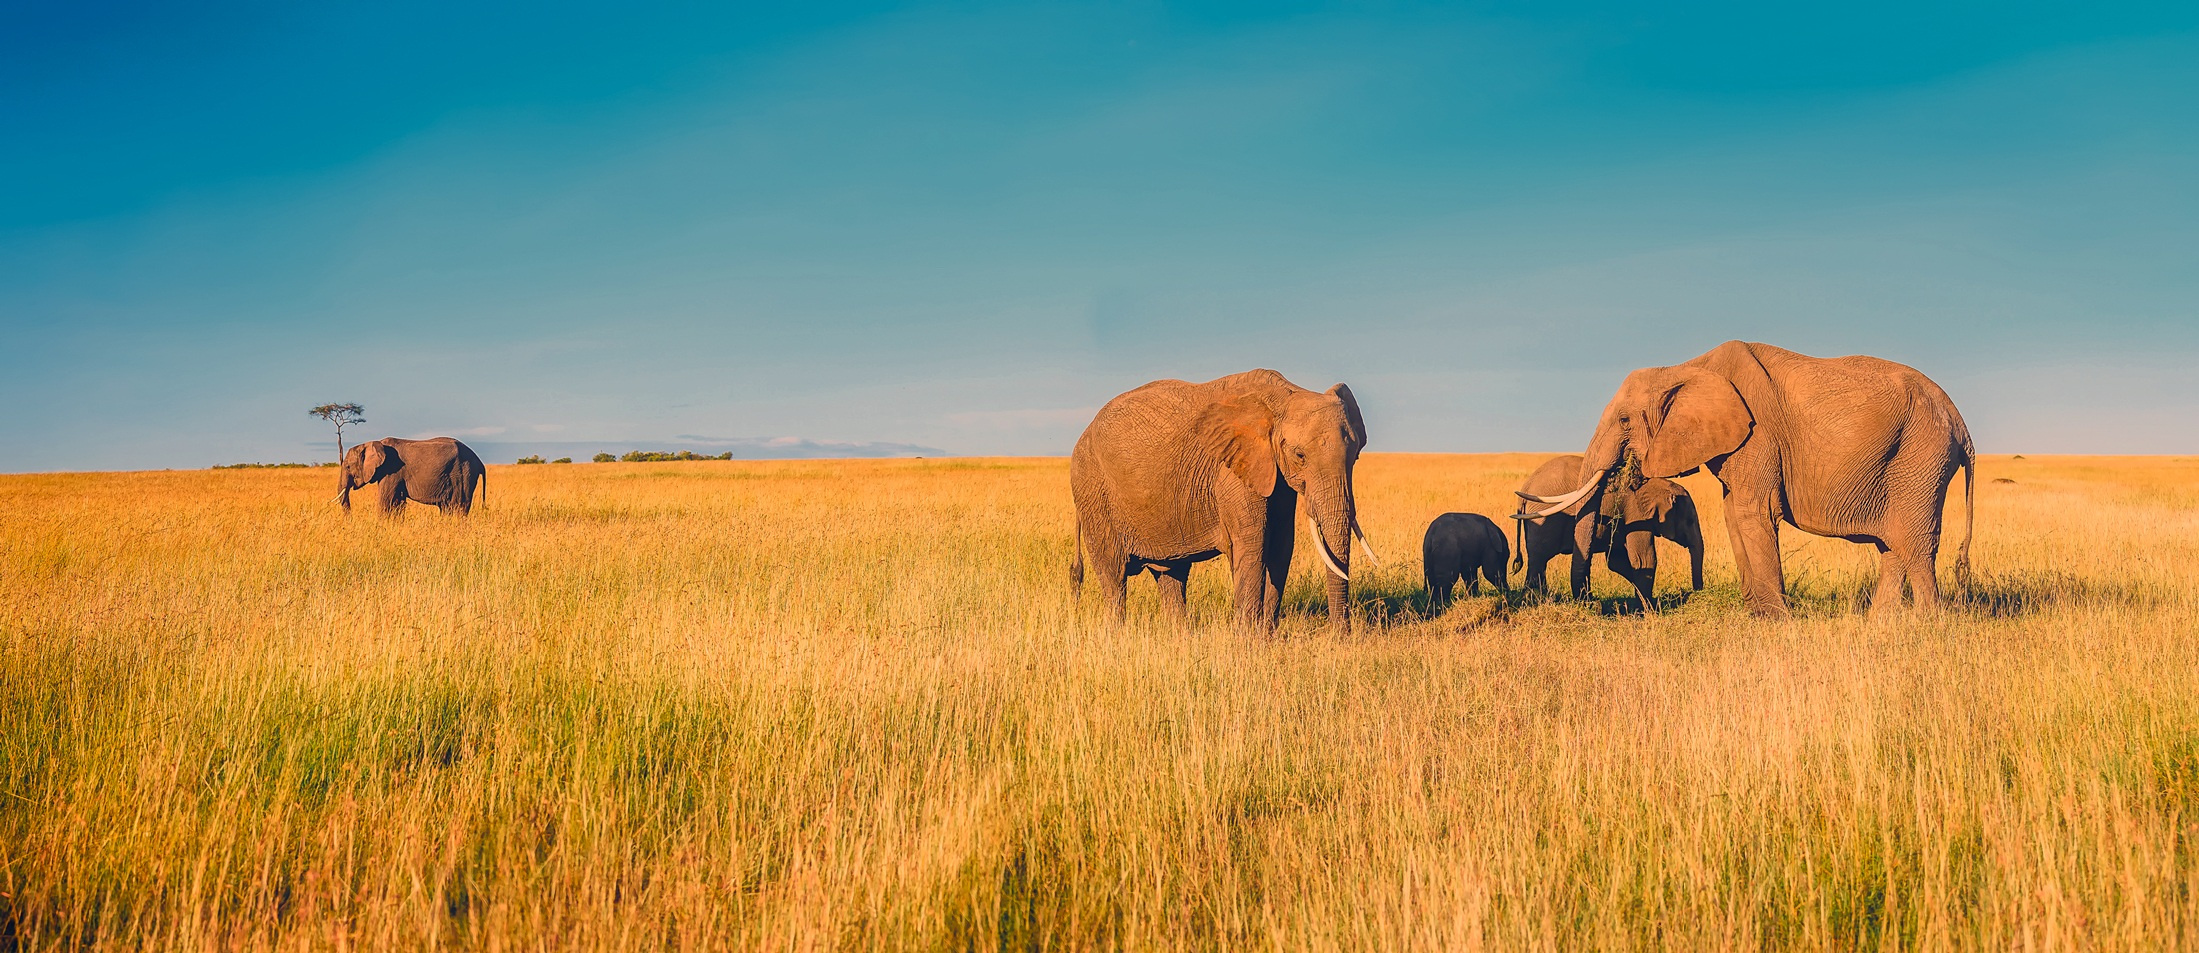 Elephants on the Grassland, Africa